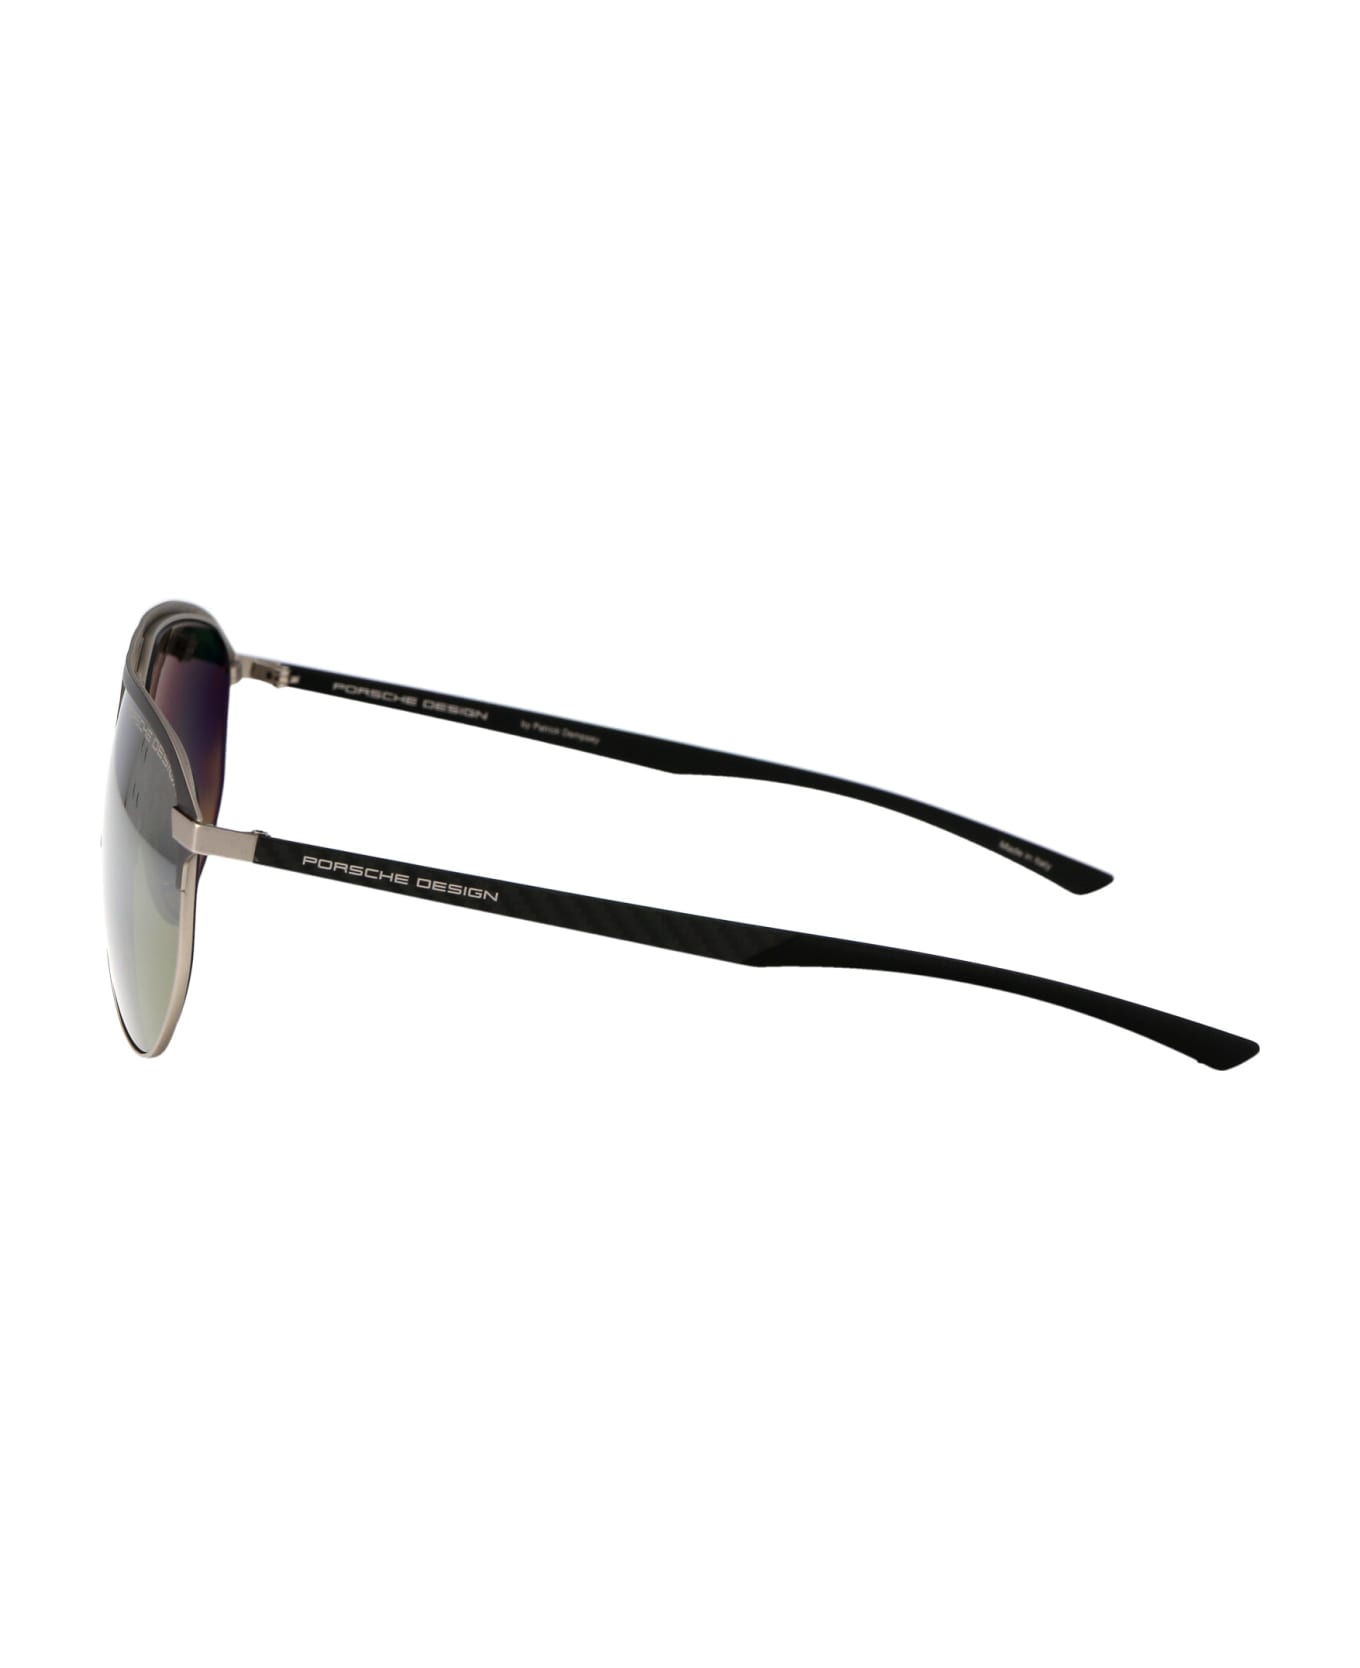 Porsche Design P8965 Sunglasses - B417 GREY BLACK サングラス